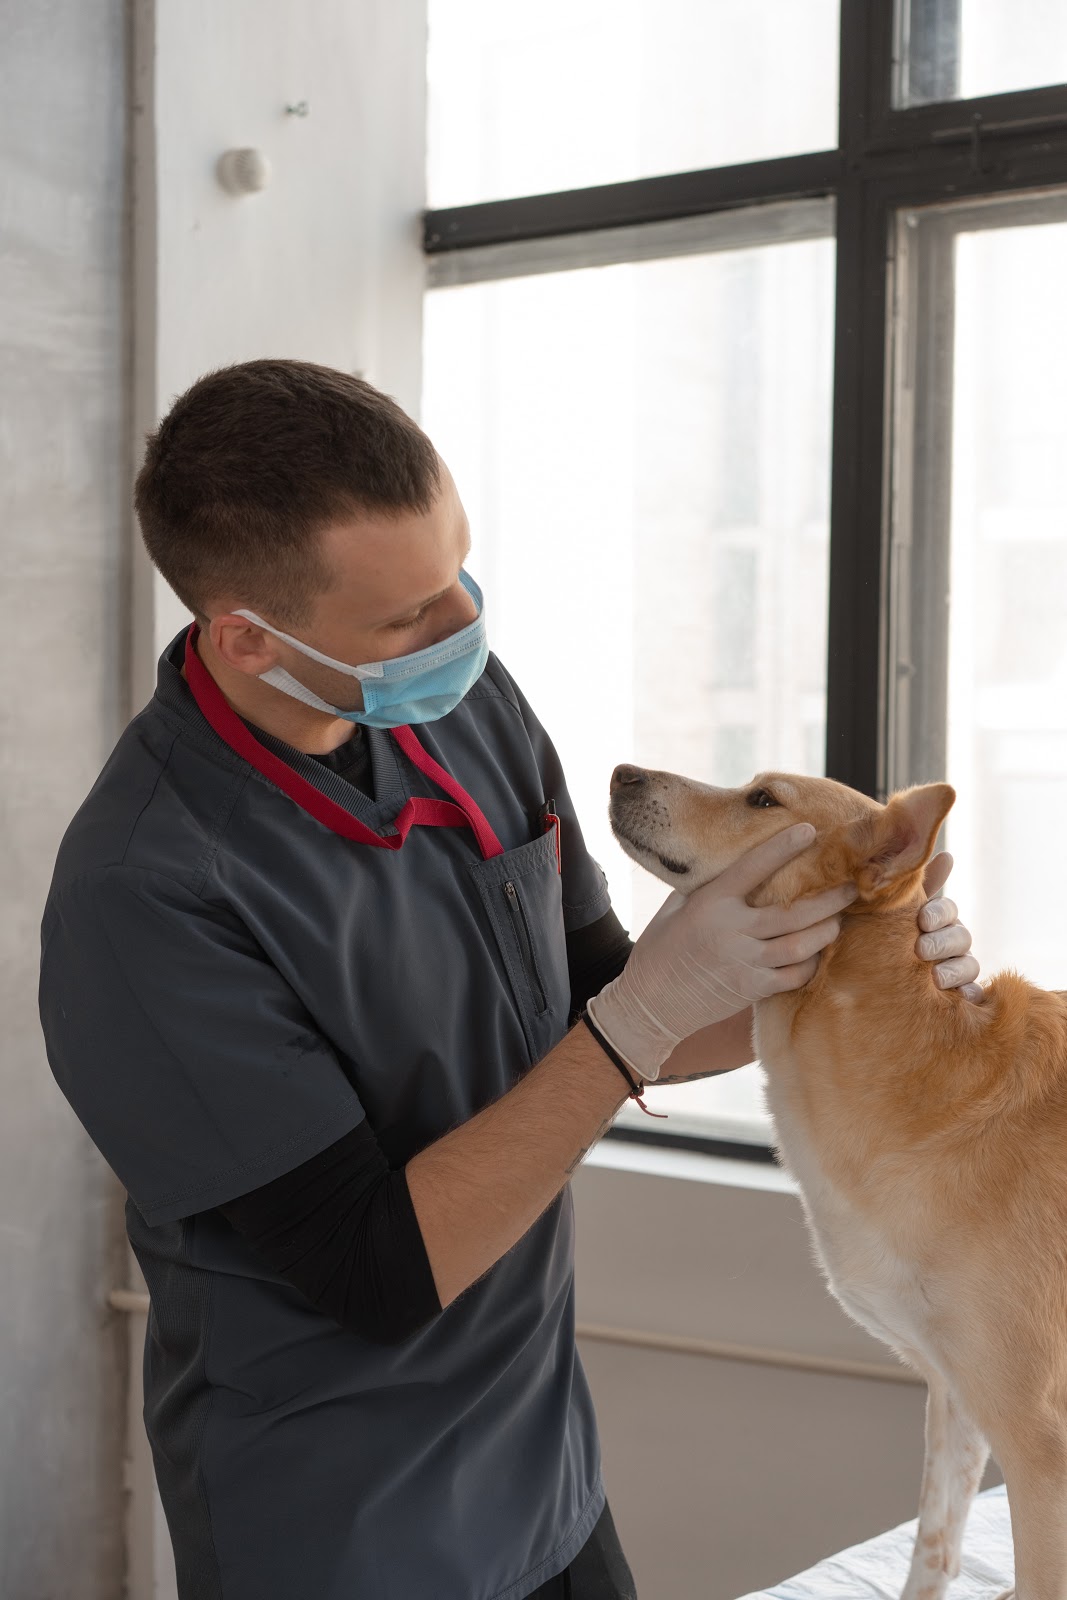 Animal Health Technician